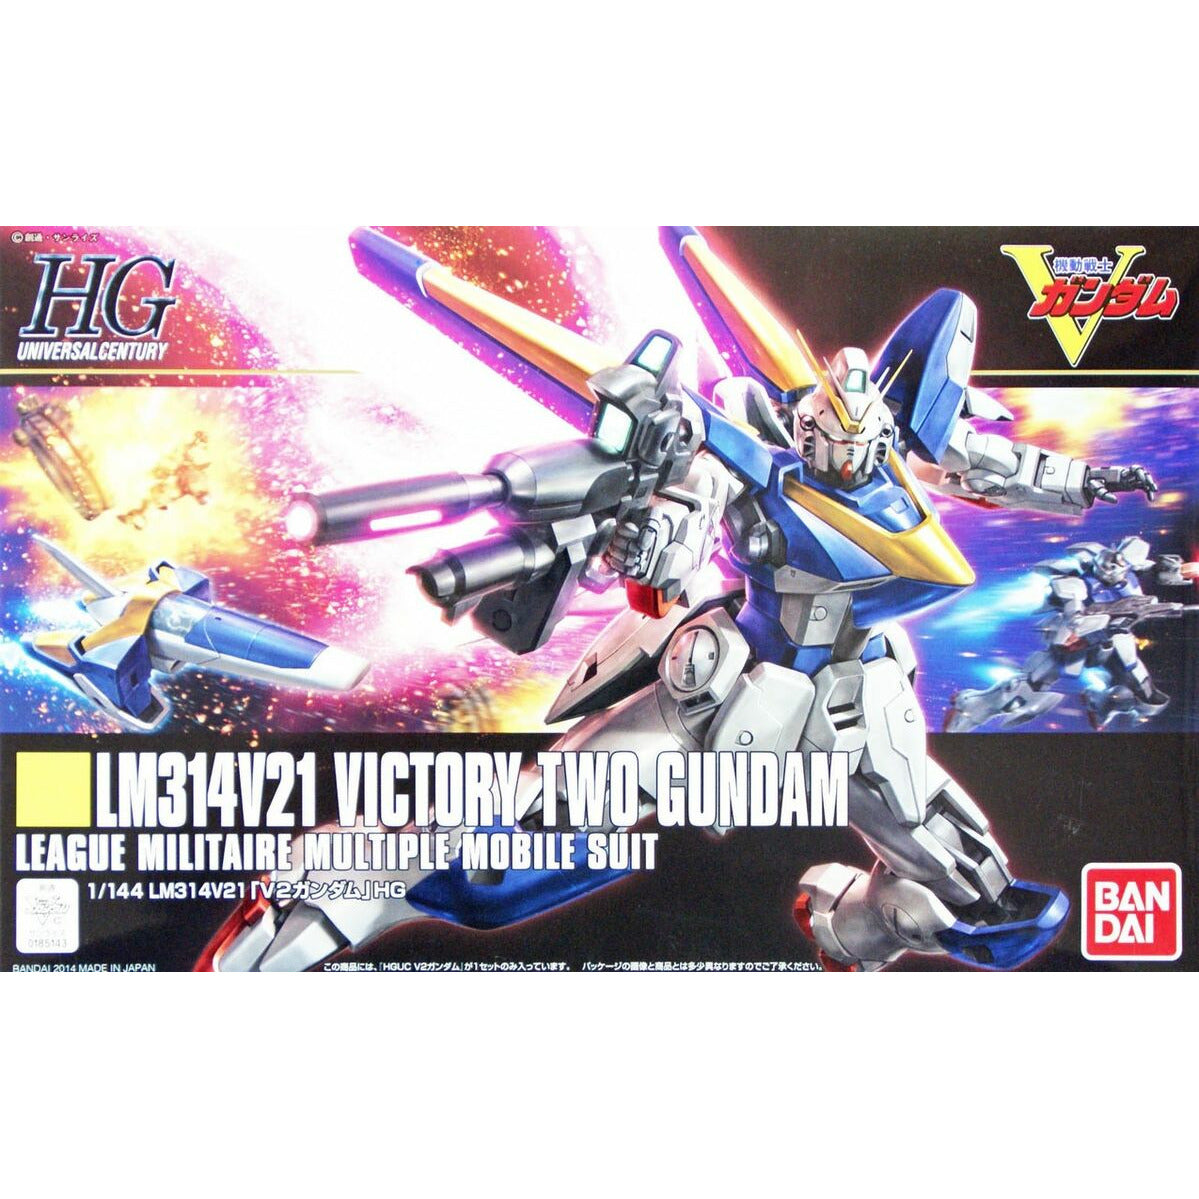 BANDAI 1/144 HGUC Victory Two Gundam